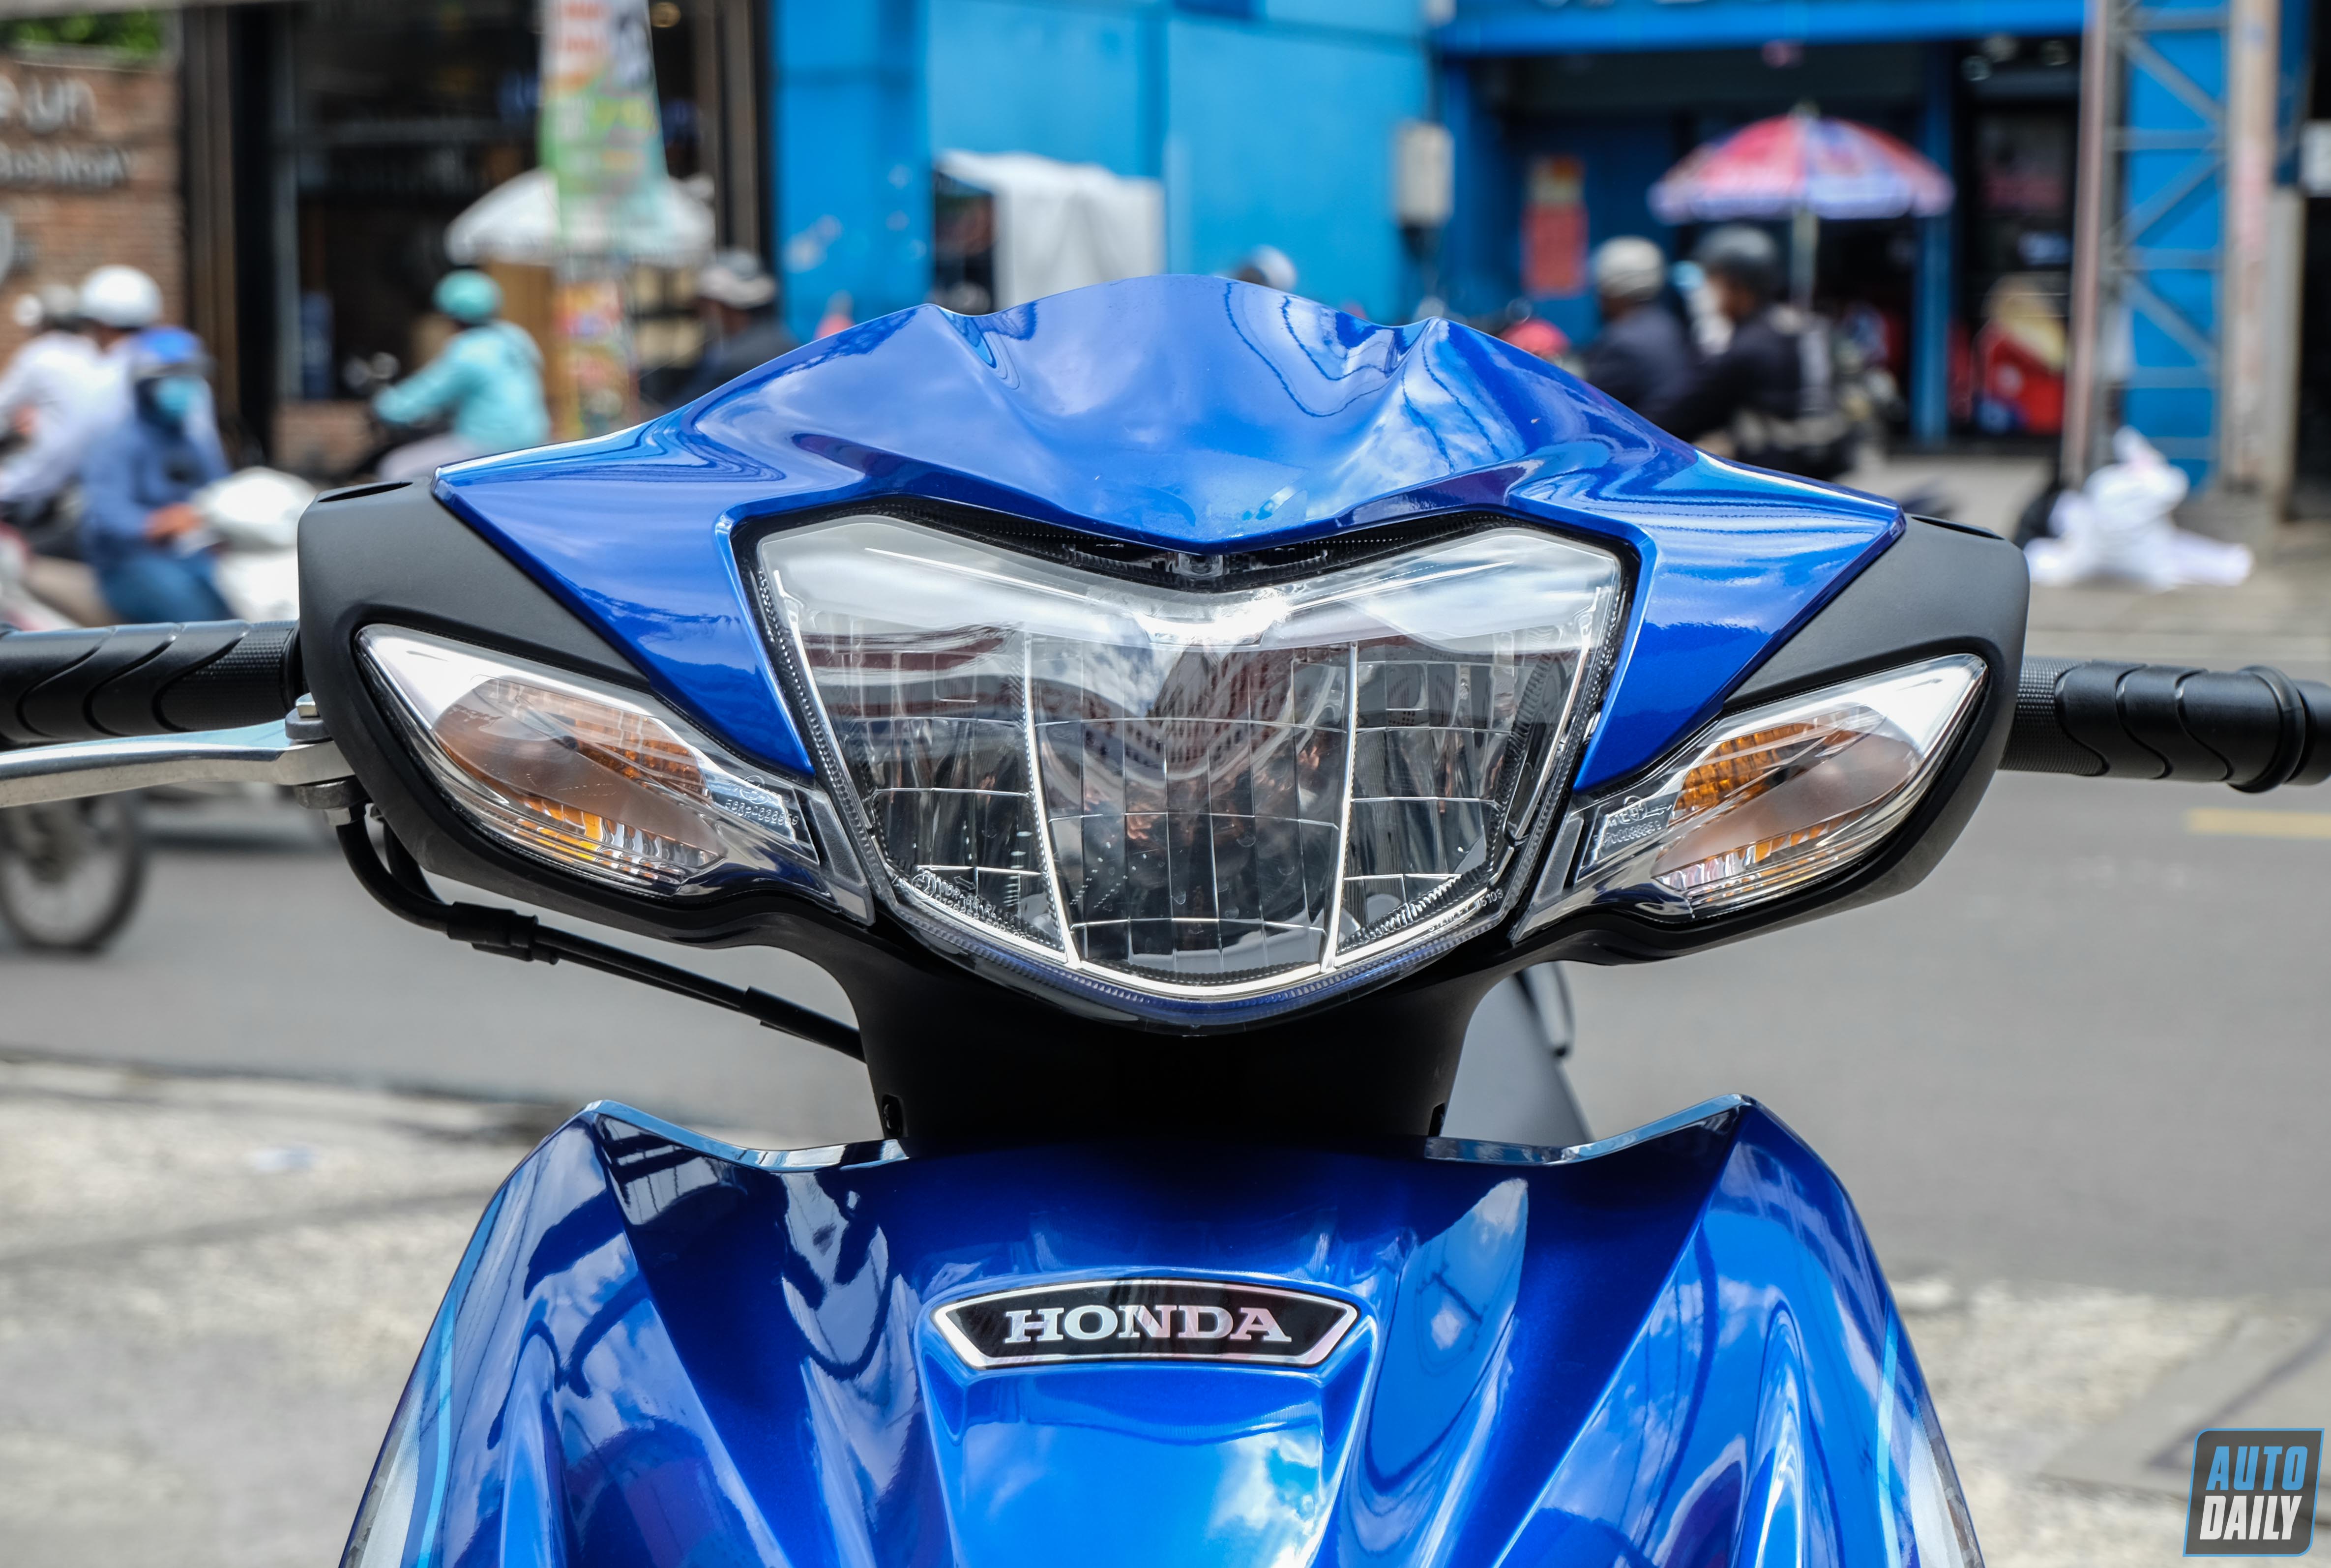 Honda Wave 110i 2021 nhập Thái “ngáo giá” được trang bị những gì? Honda Wave 110i nhập Thái (10).jpg